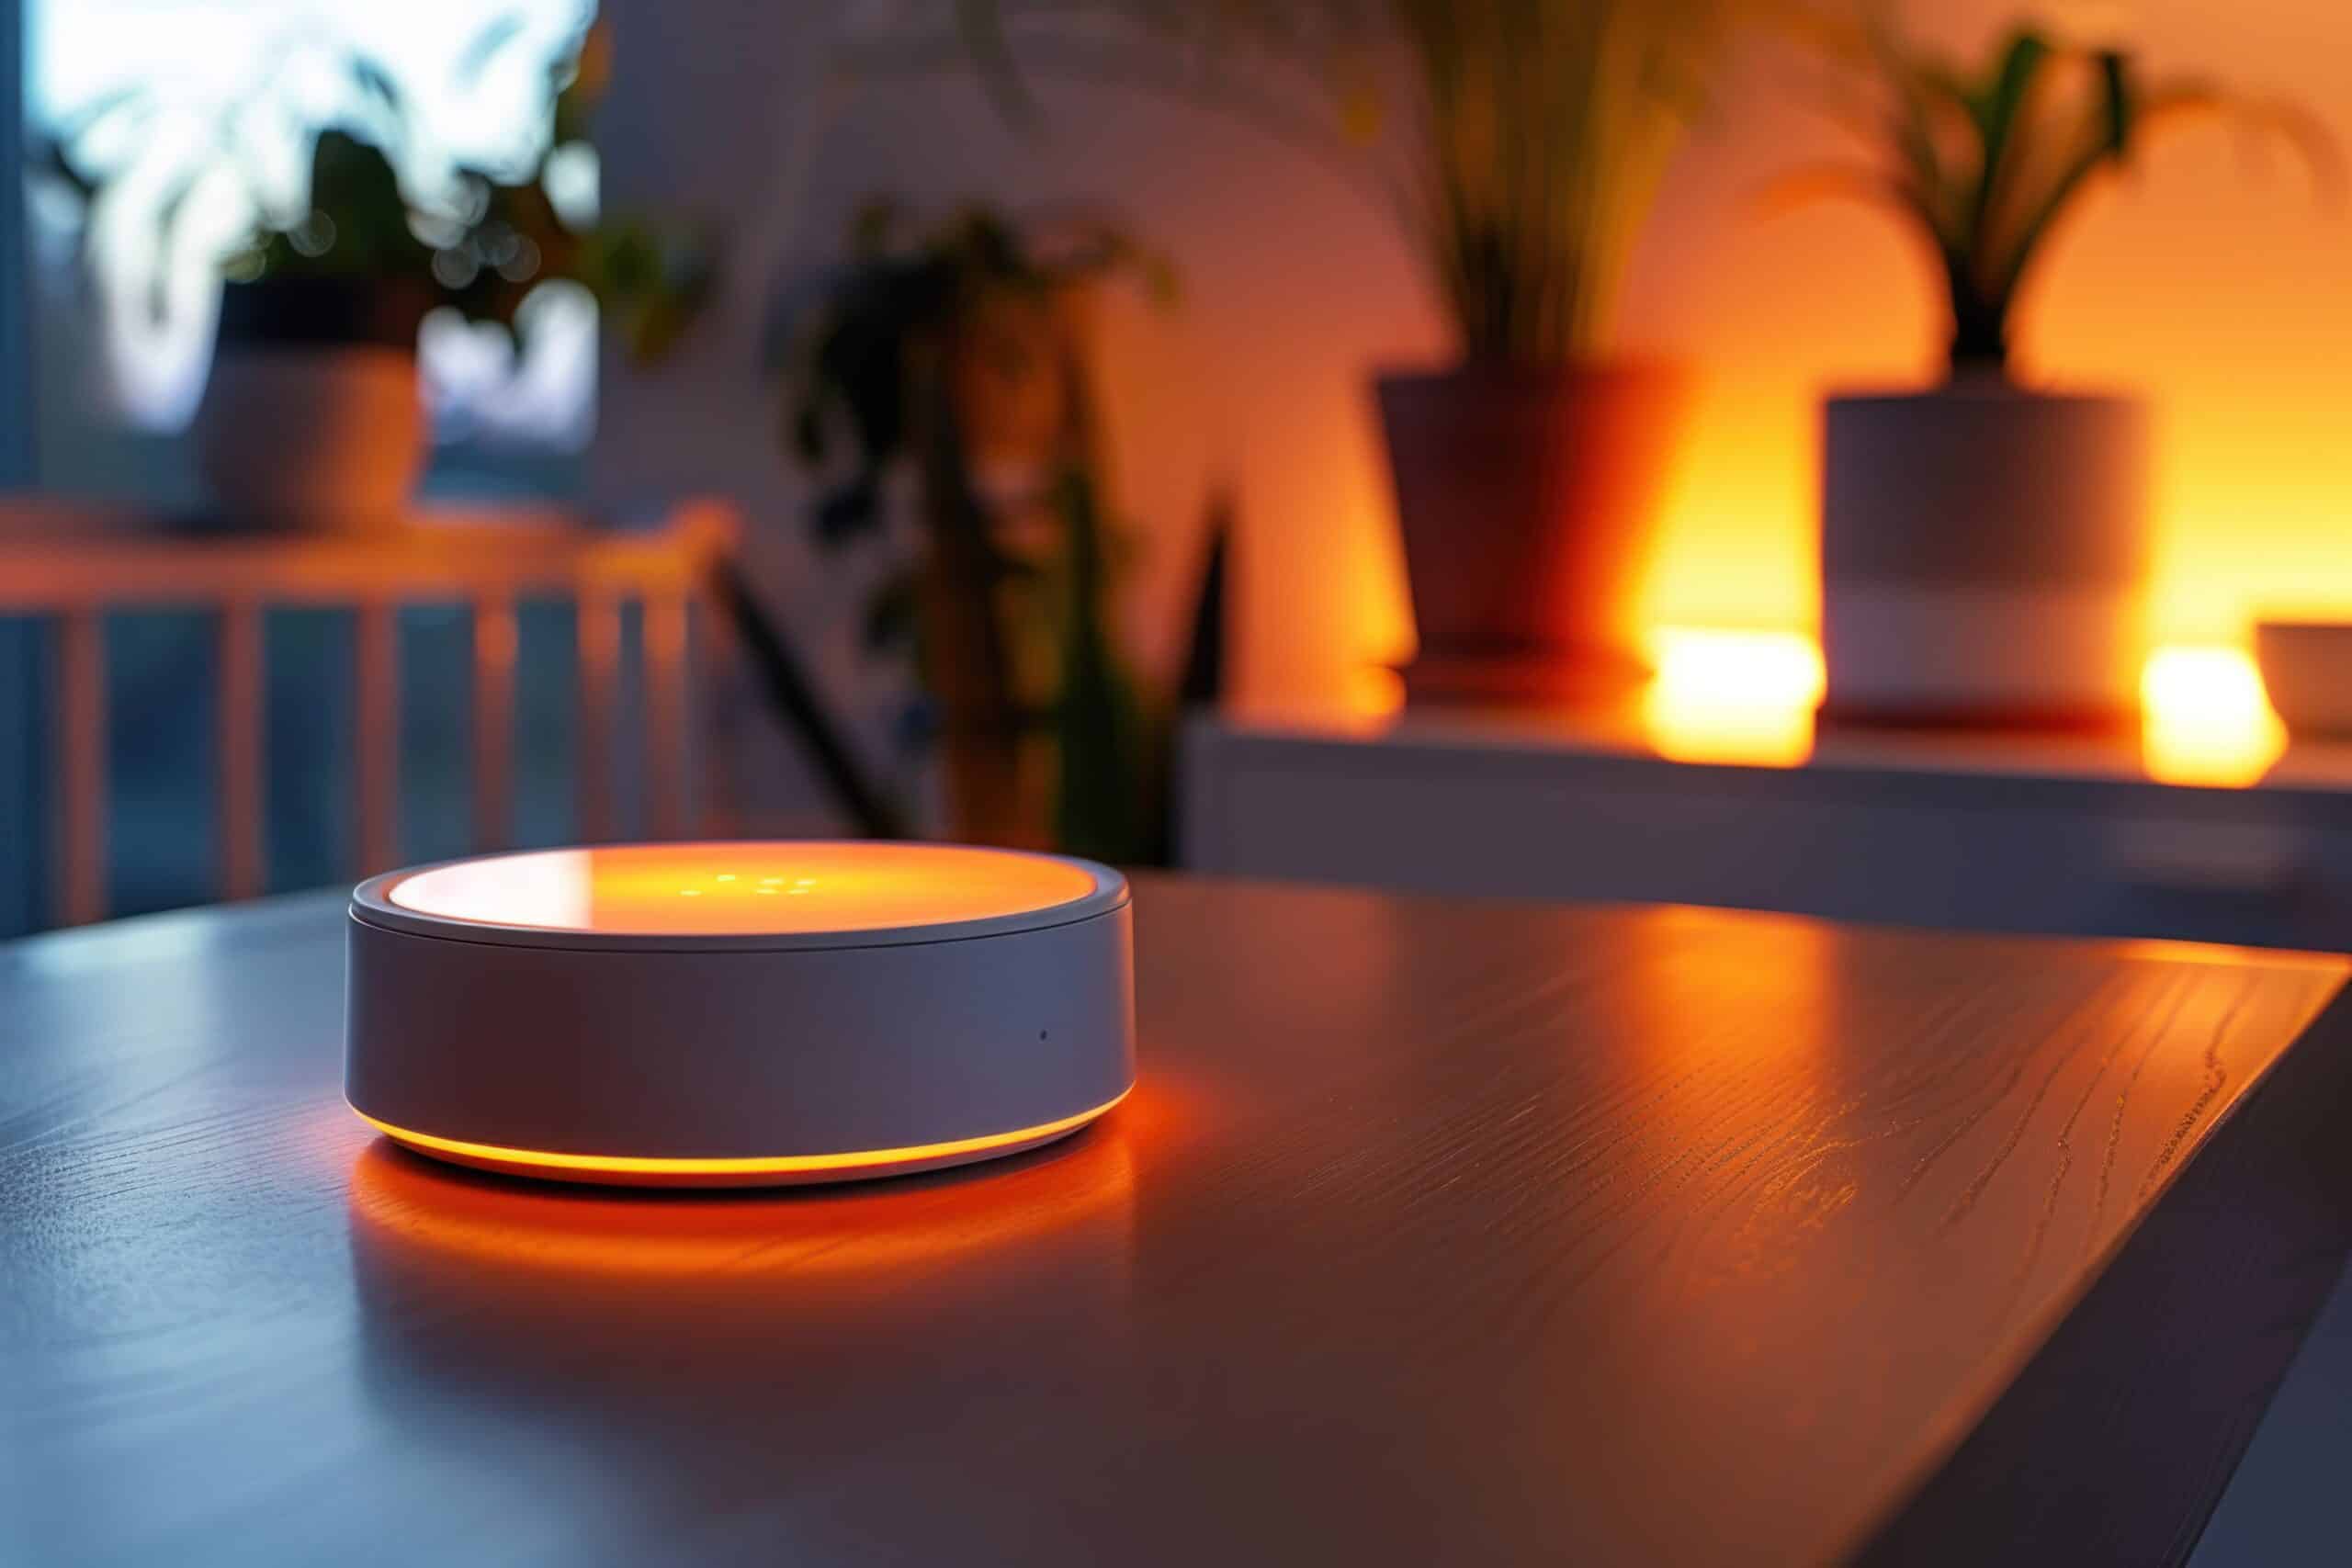 www.appr.com : Do I Need A Smart Home Hub With Alexa?